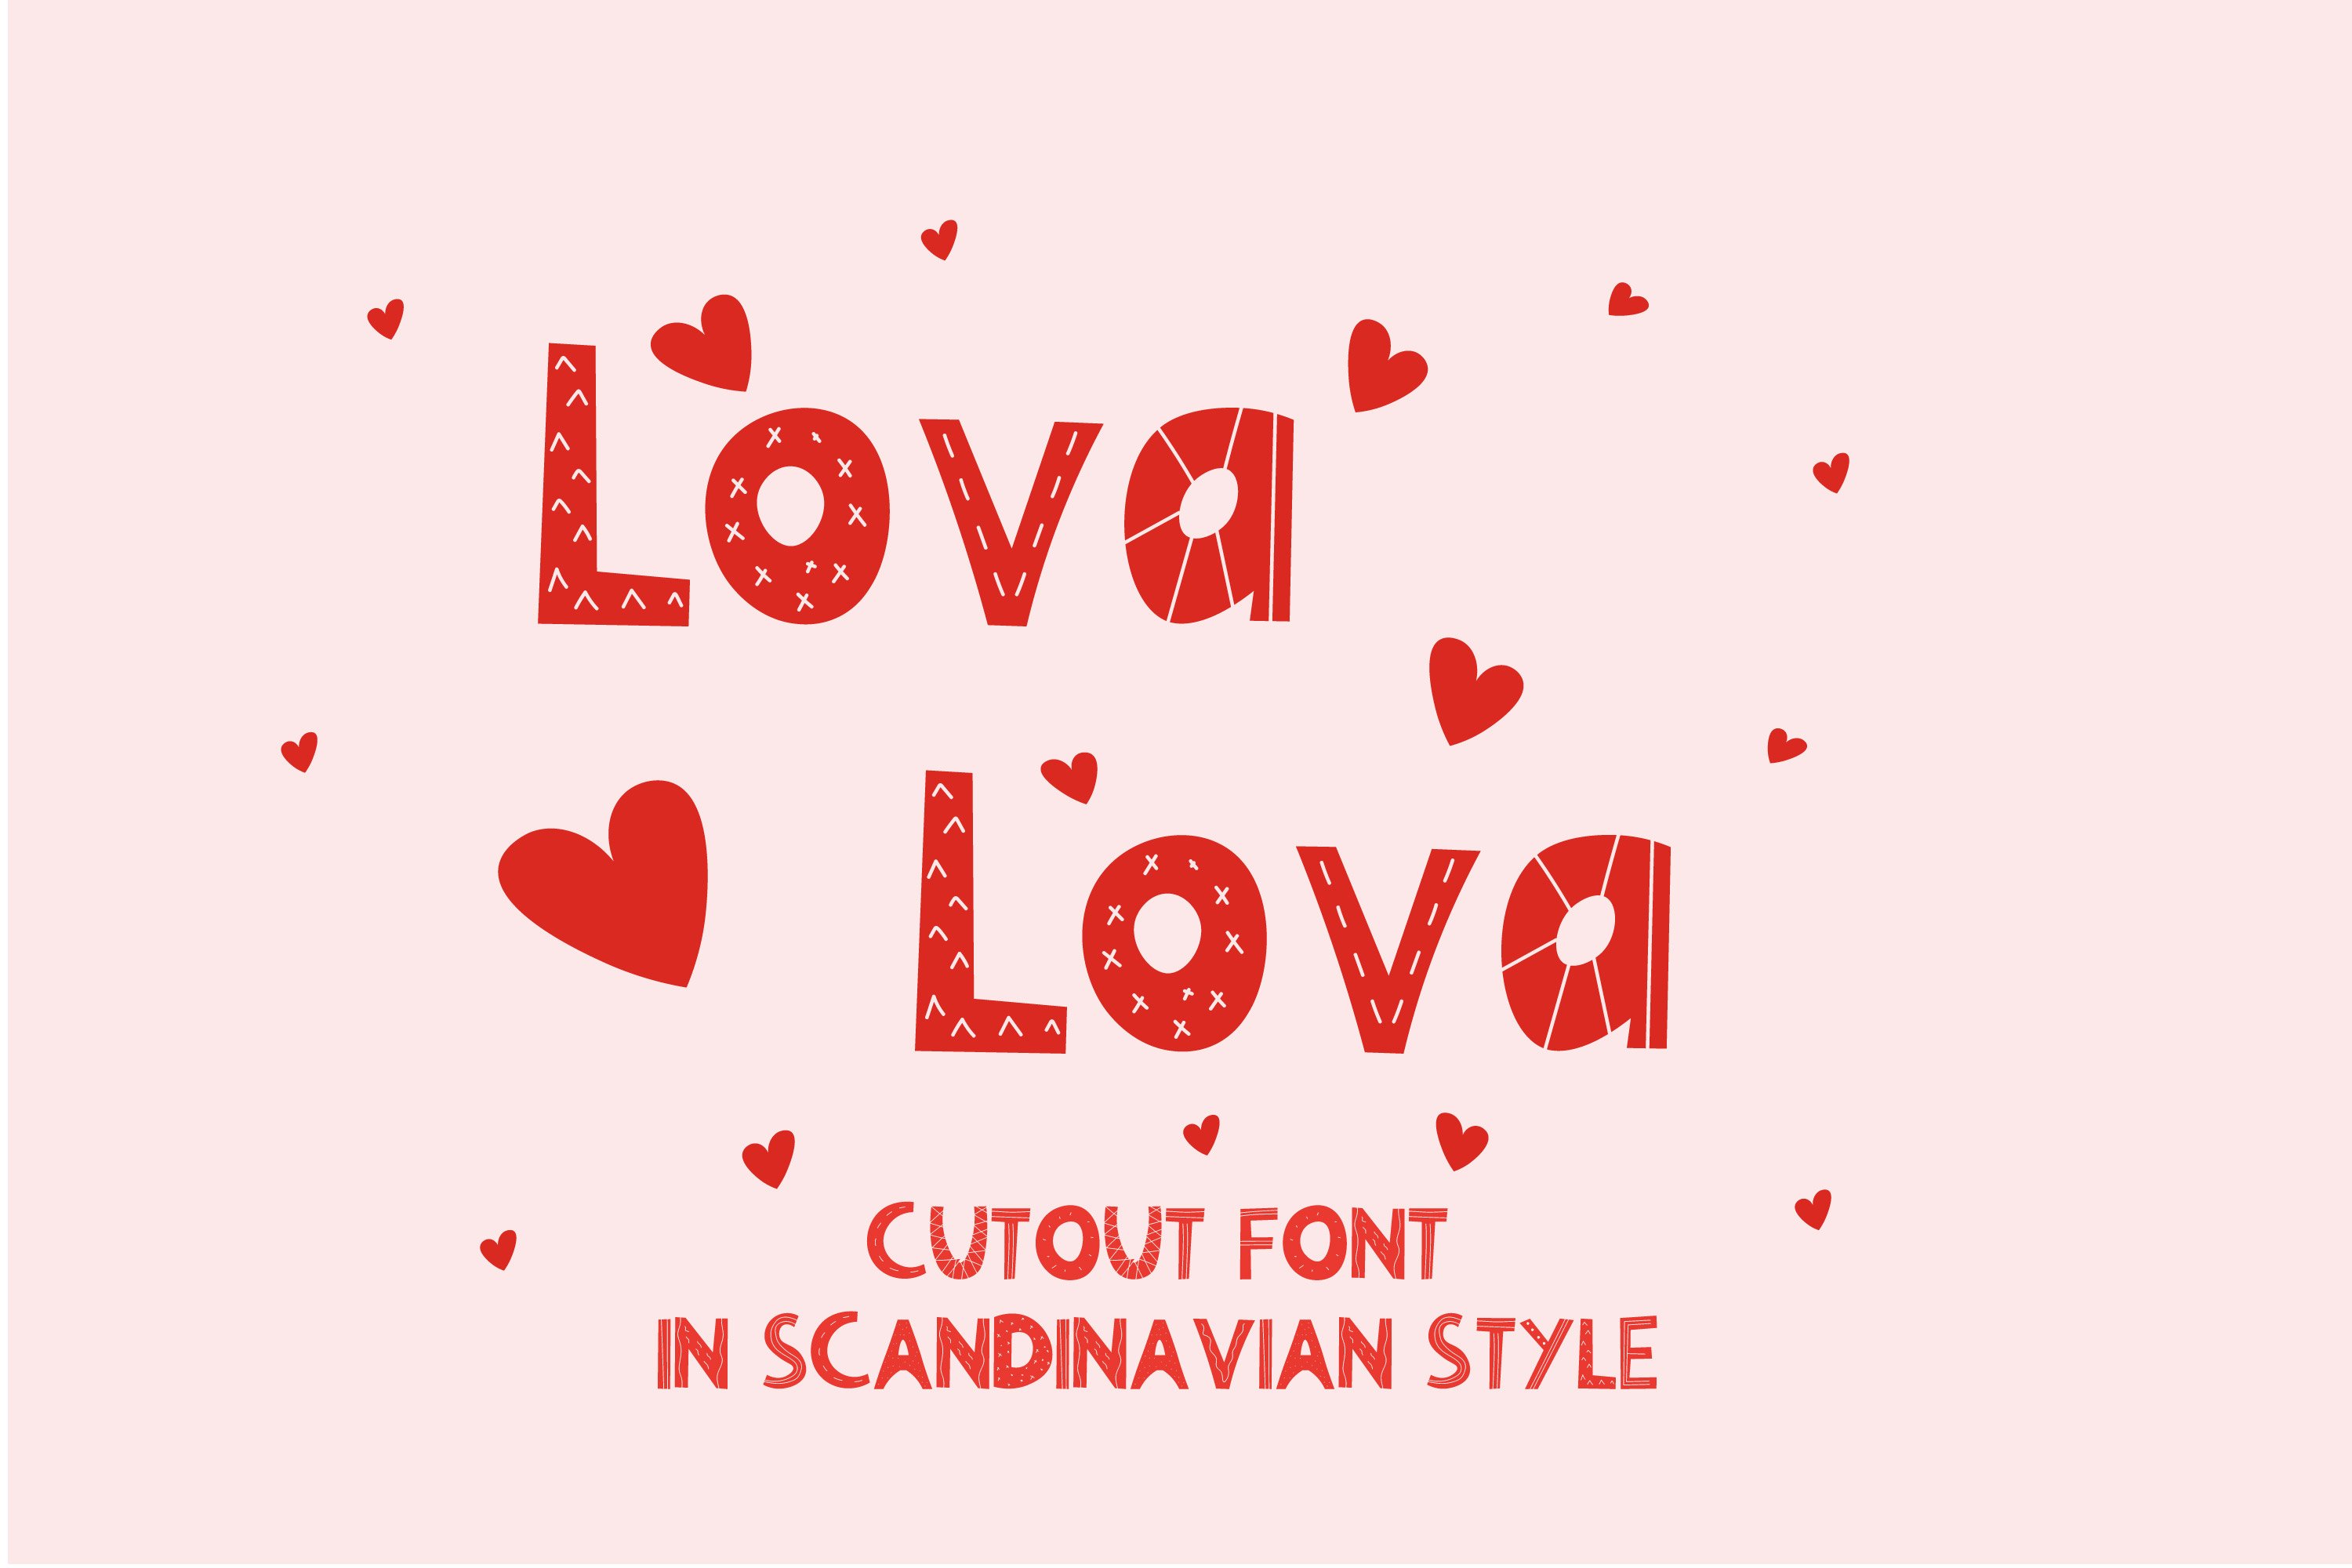 Lova Lova Cutout font cover image.